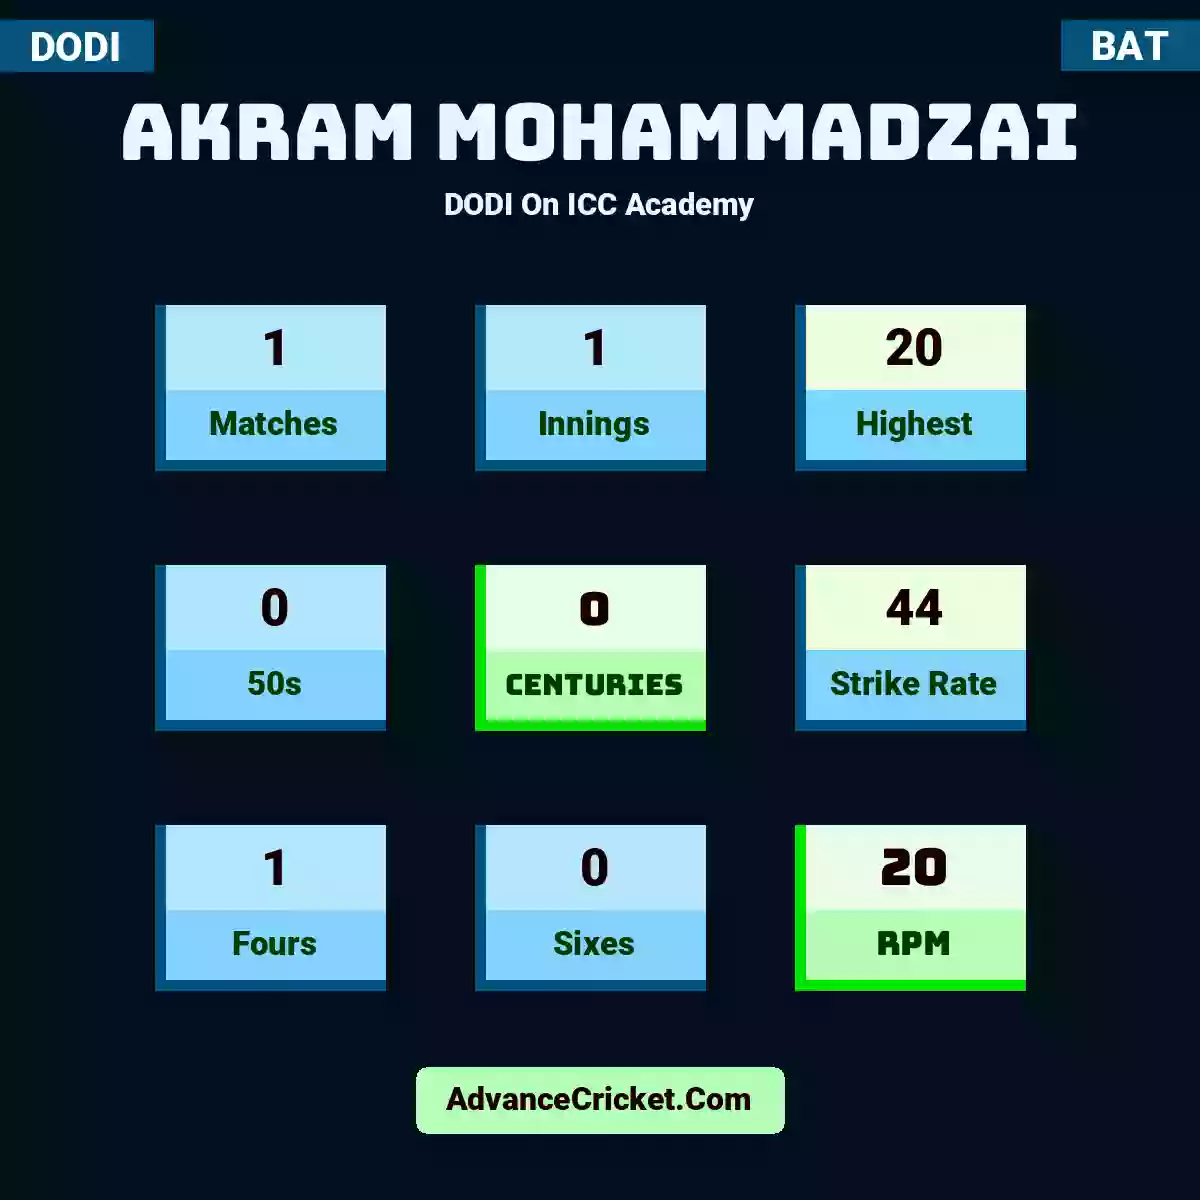 Akram Mohammadzai DODI  On ICC Academy, Akram Mohammadzai played 1 matches, scored 20 runs as highest, 0 half-centuries, and 0 centuries, with a strike rate of 44. A.Mohammadzai hit 1 fours and 0 sixes, with an RPM of 20.